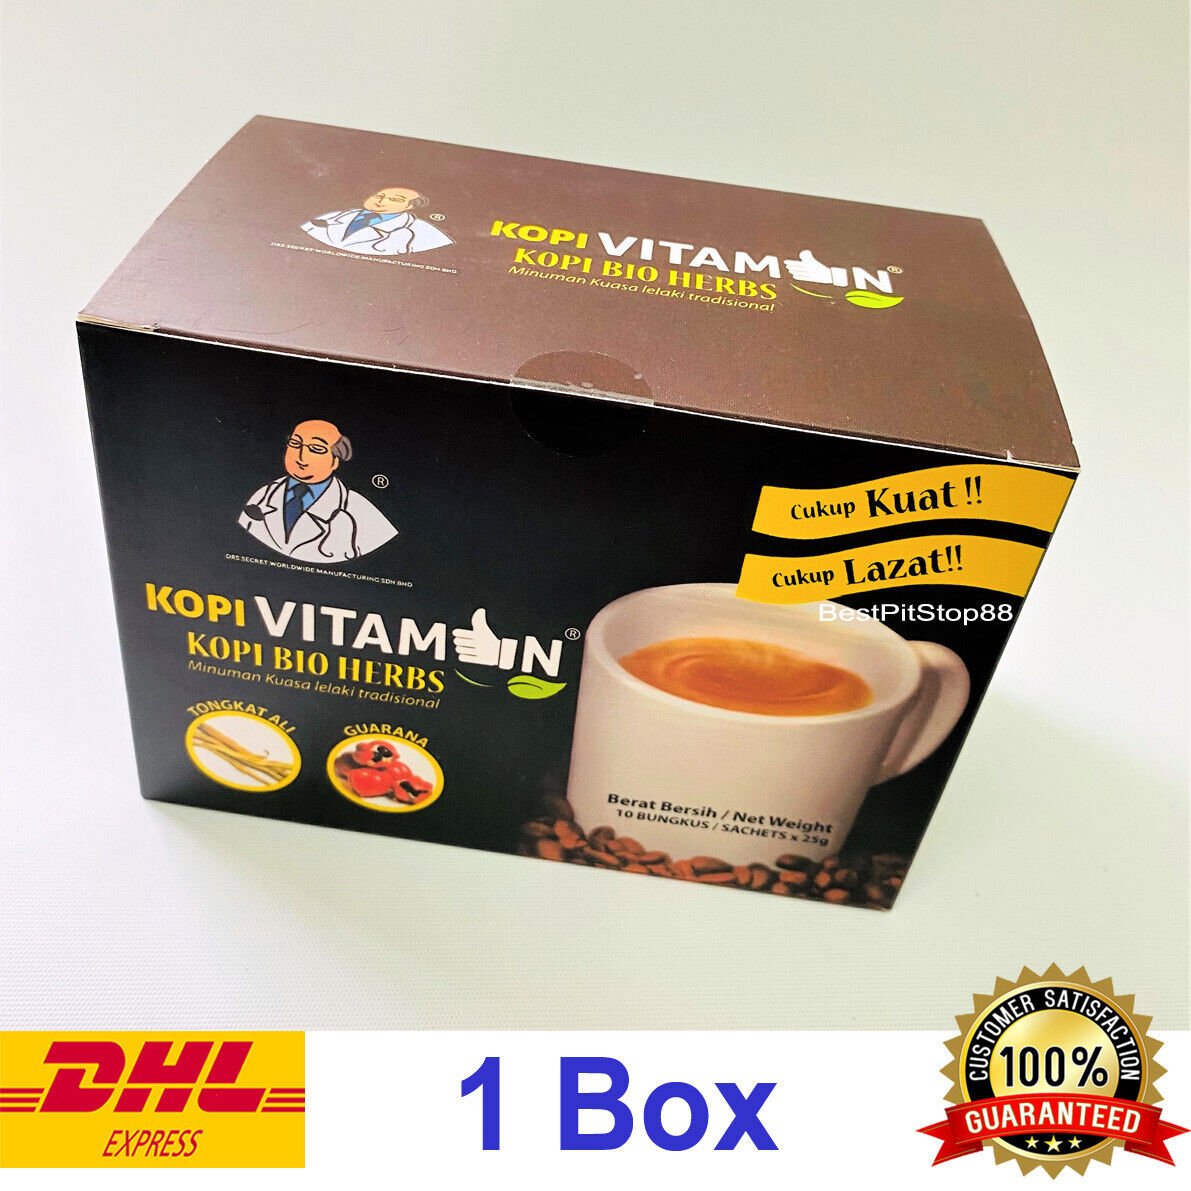 Kopi Vitamin Bi0 Herbs Original Coffee for Men DHL EXPRESS SHIPPING